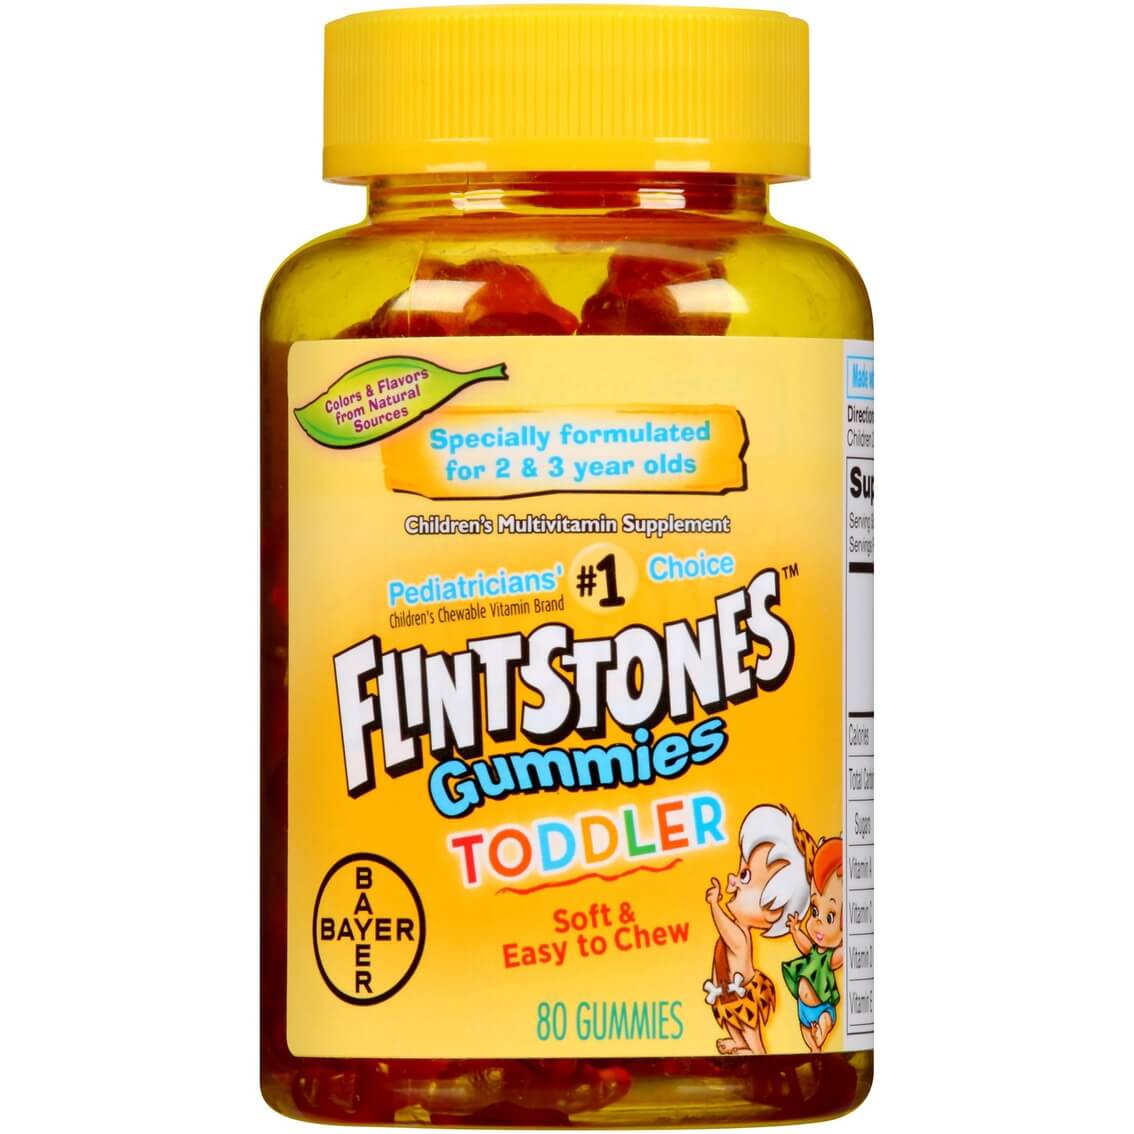 Flintstones Toddler Gummies متعددة الفيتامينات لدعم صحة الاطفال